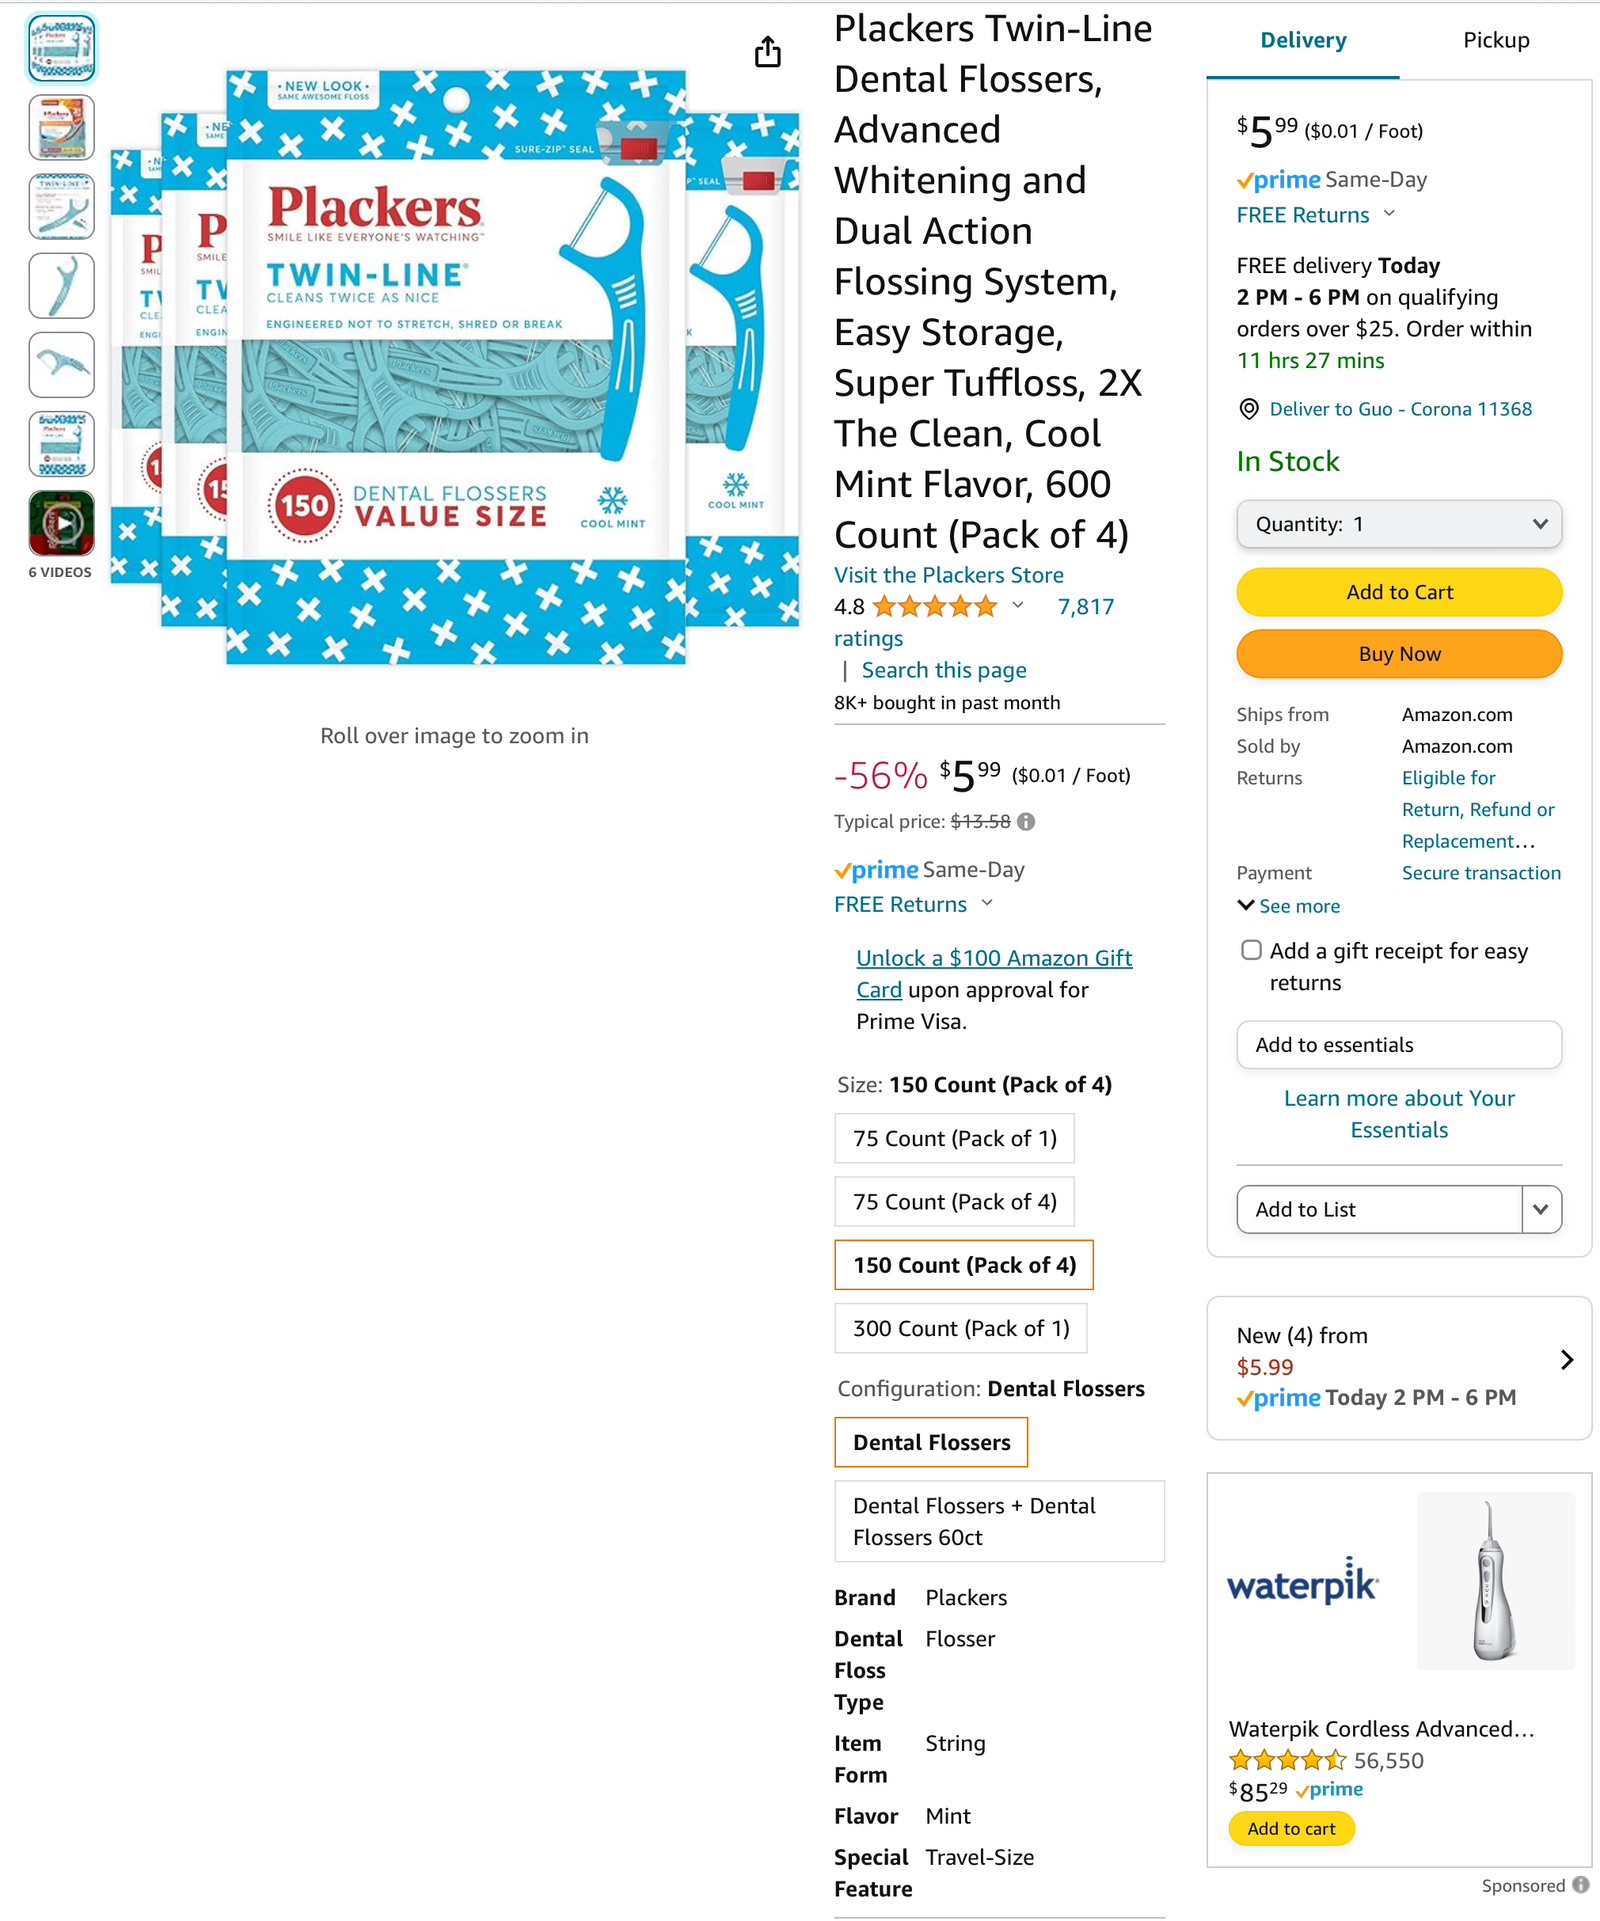 Plackers Twin-Line Dental Flossers双线牙线，每包150支，每组4包才$5.99，4.4折，史低价